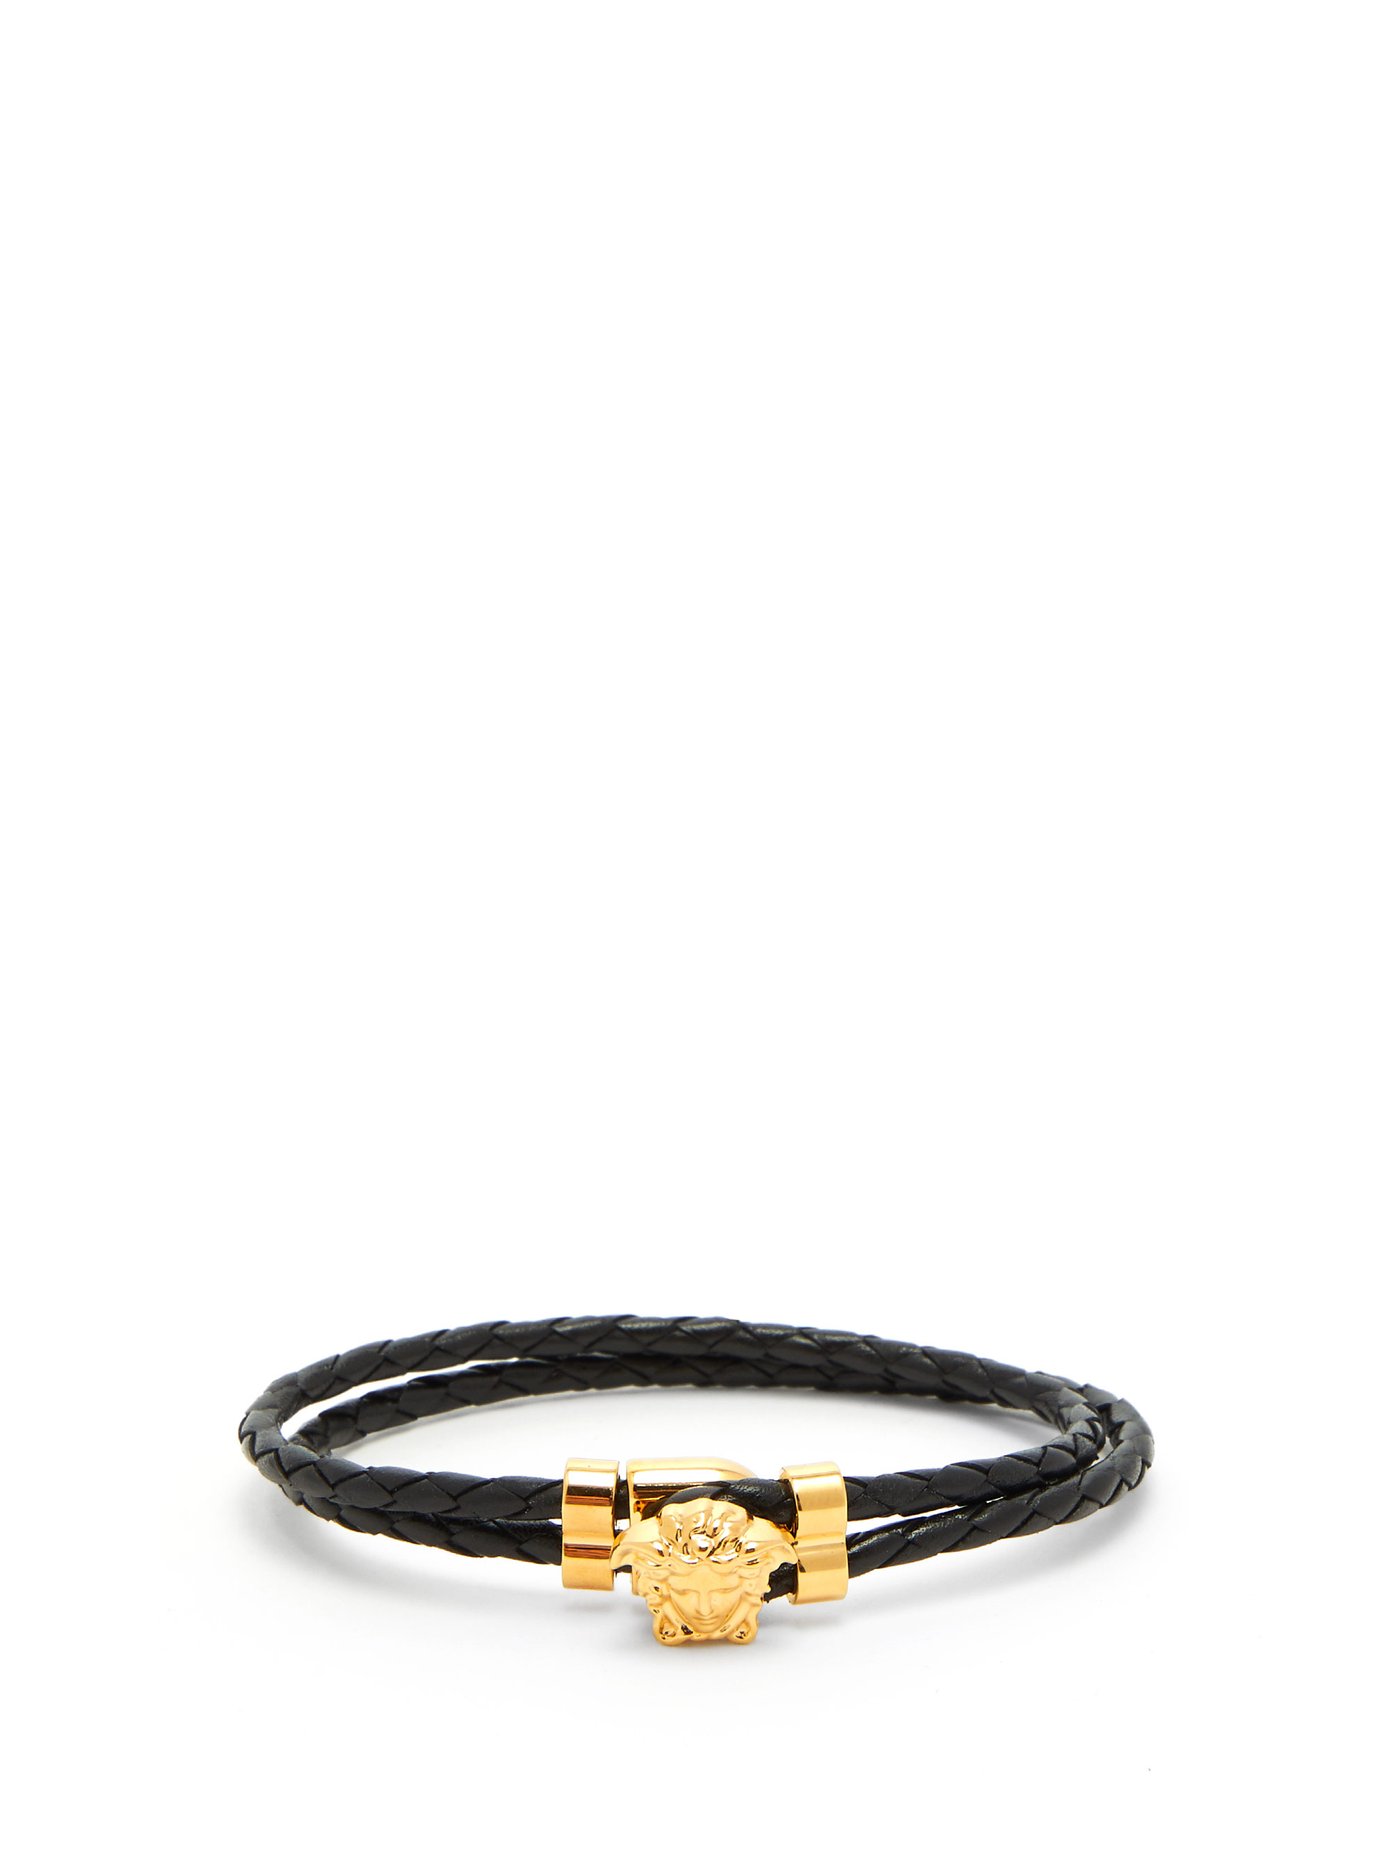 leather cord medusa bracelet